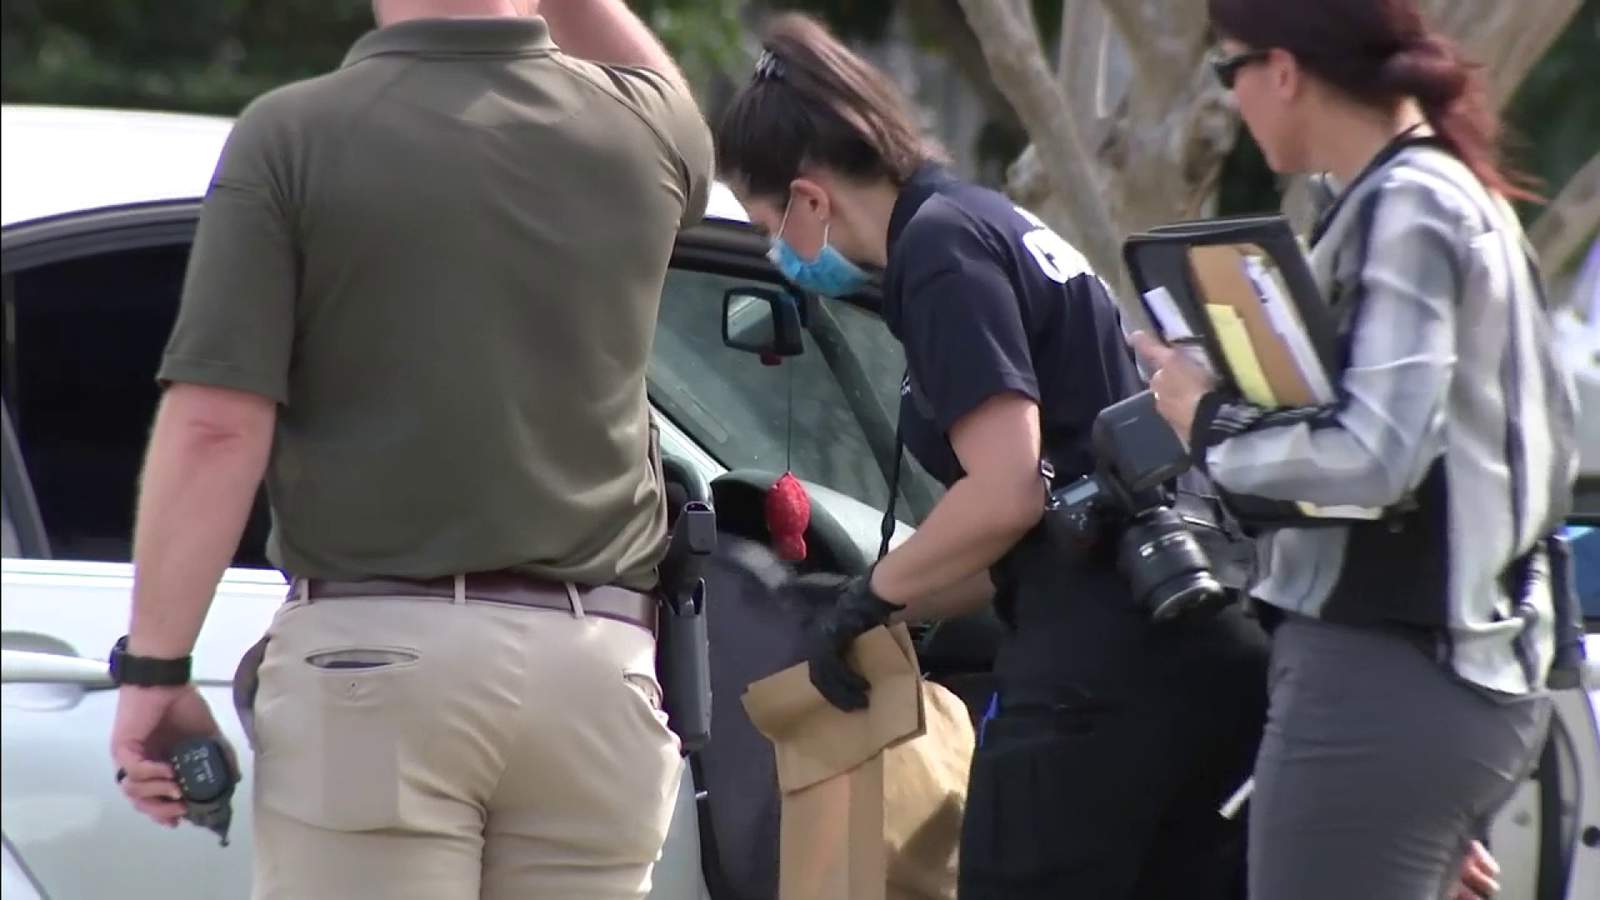 Officers search for gunman in Lexus after 1 injured in Broward road rage shooting